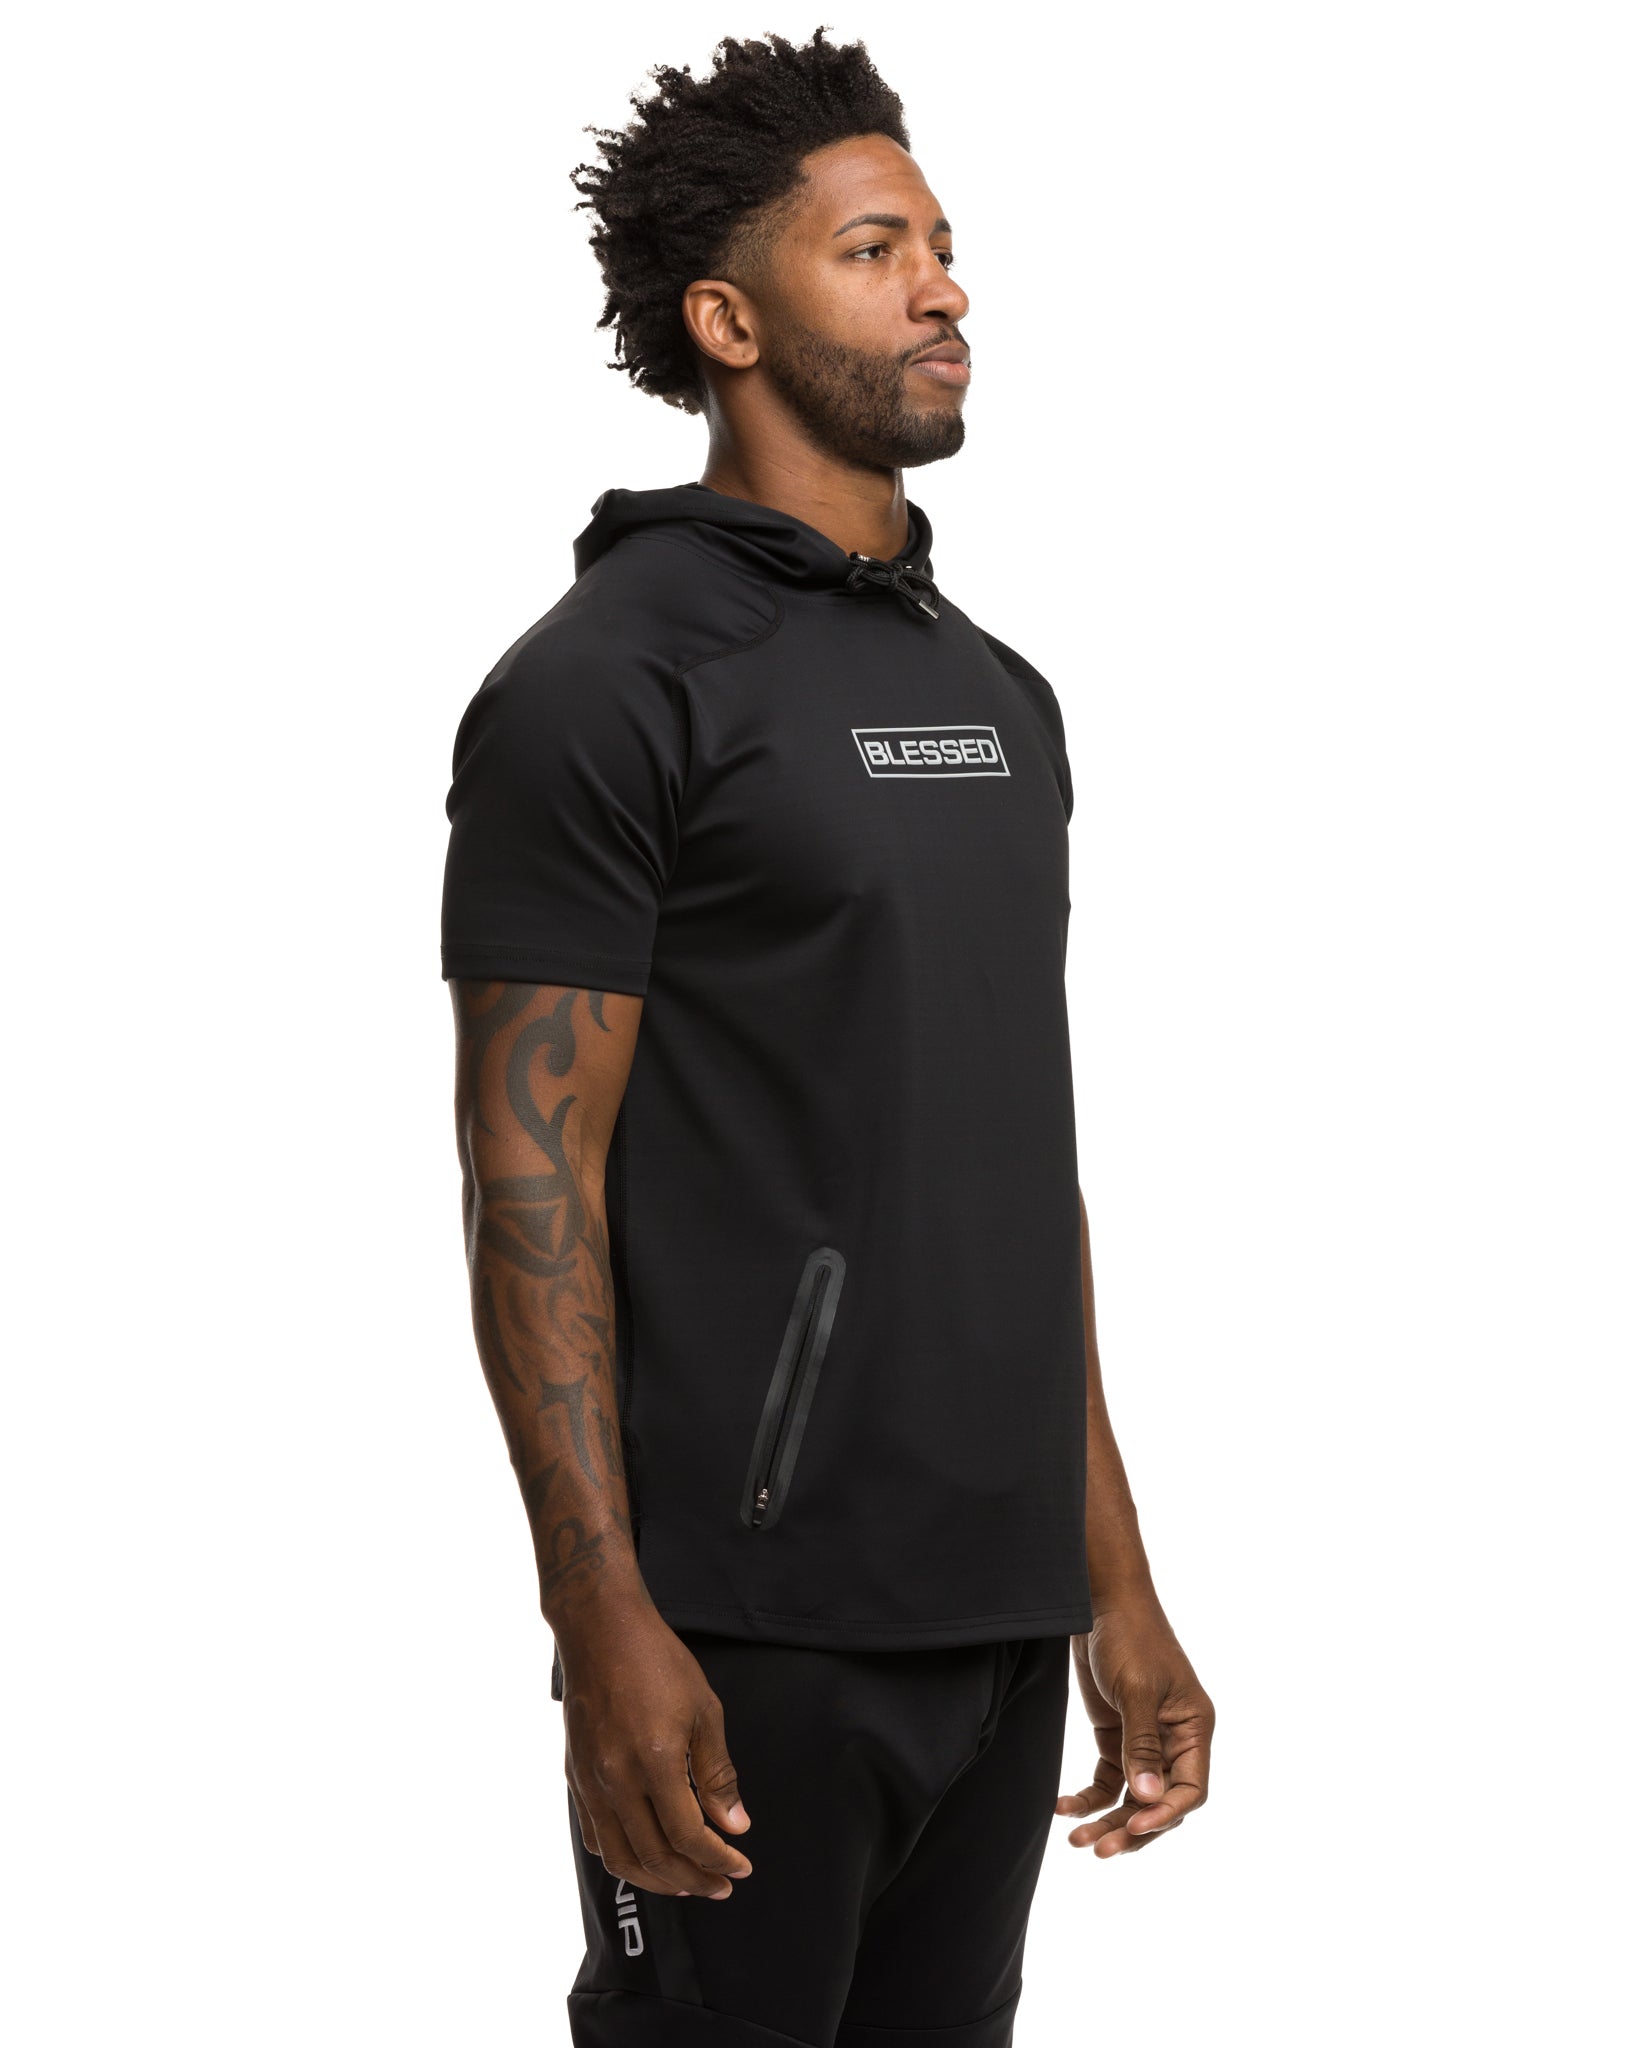 Men's Blessed Performance Tech Short Sleeve Hoodie in Black Color